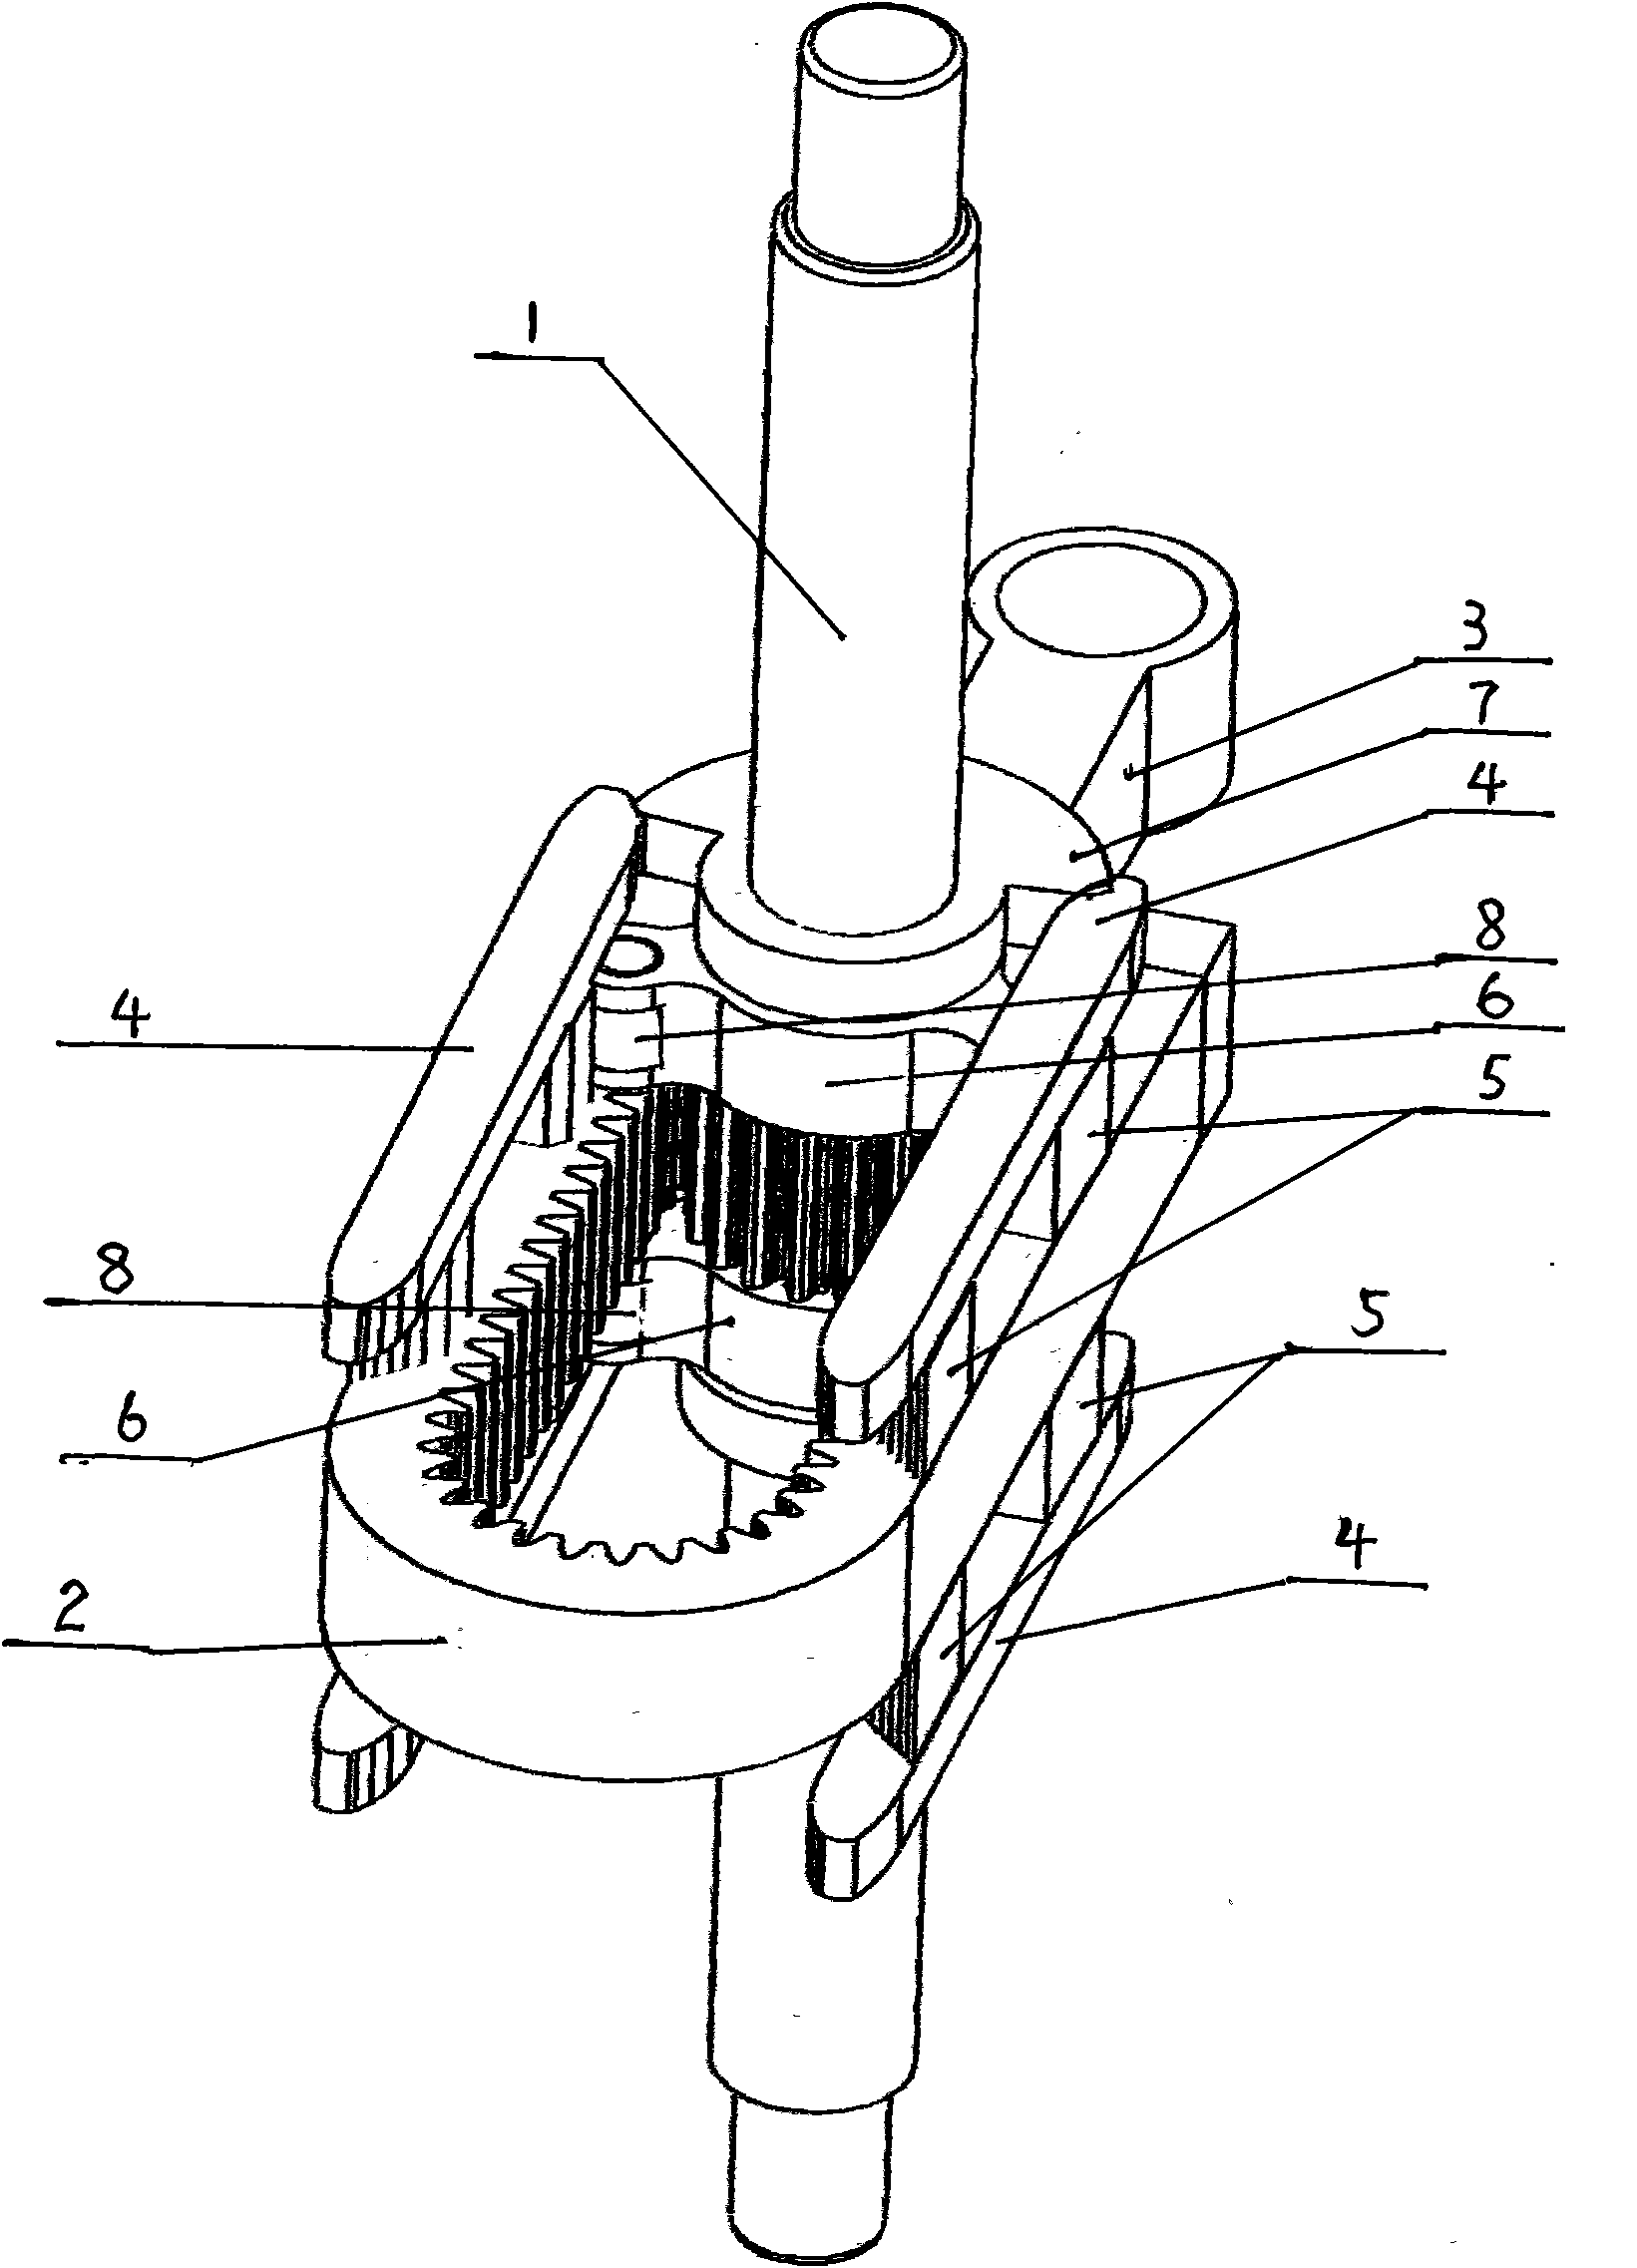 Internal gear rack linkage mechanism of gear shaft of engine